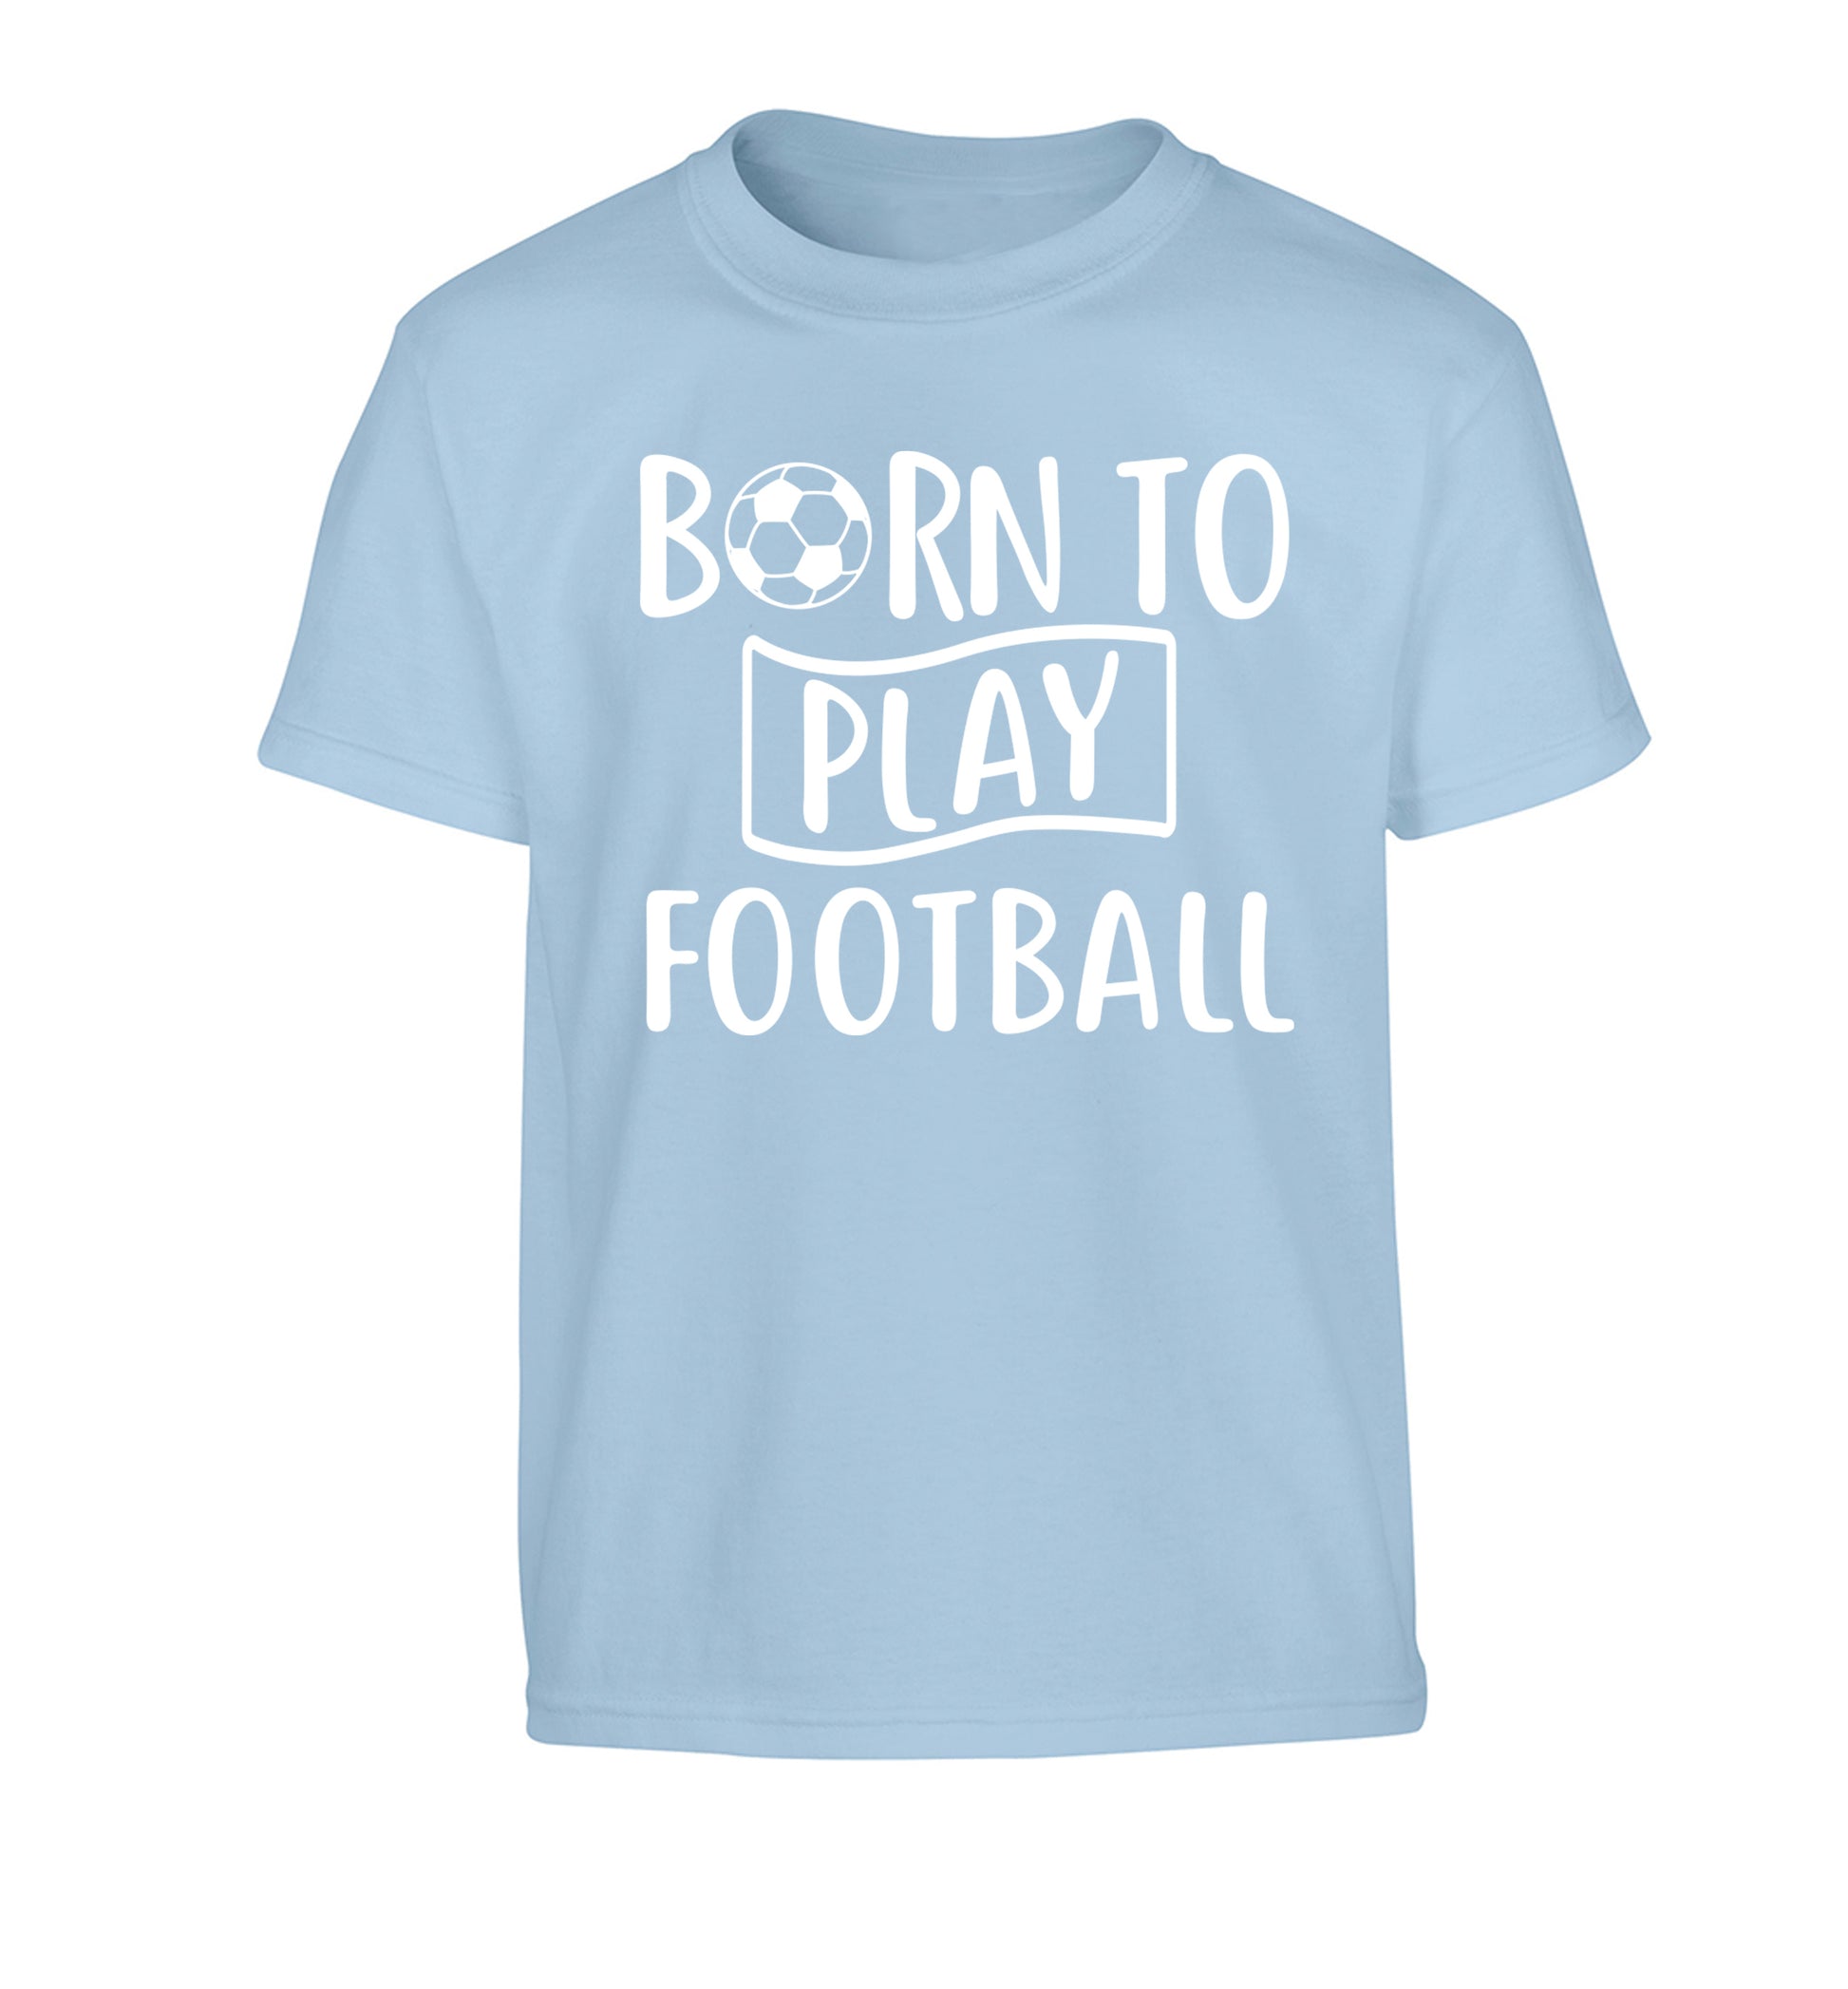 Born to play football Children's light blue Tshirt 12-14 Years